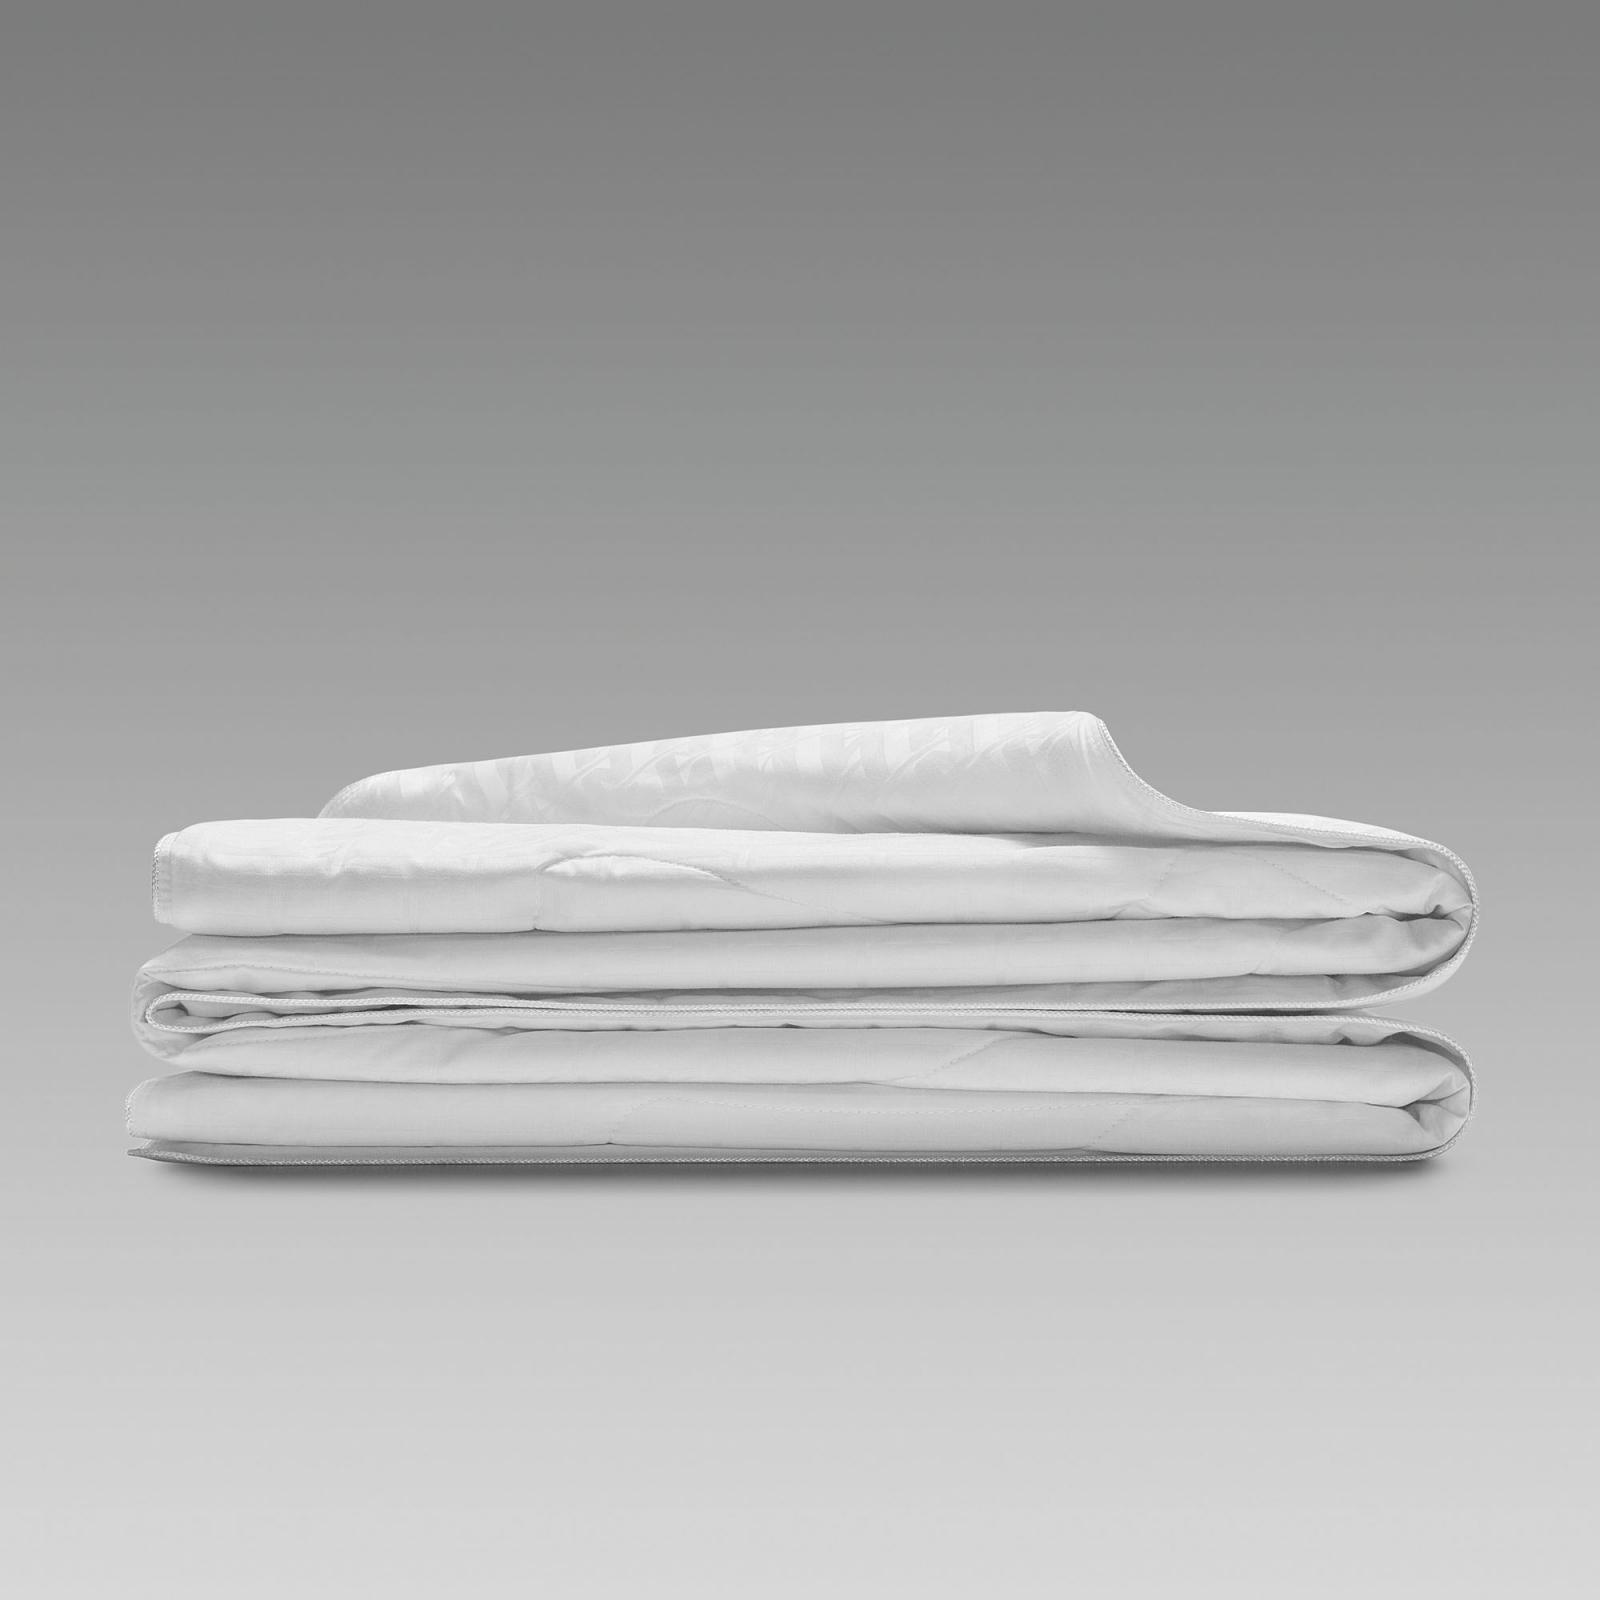 Одеяло Togas селена лайт 200х210 см (20.04.16.0108), размер 200х210 см - фото 2